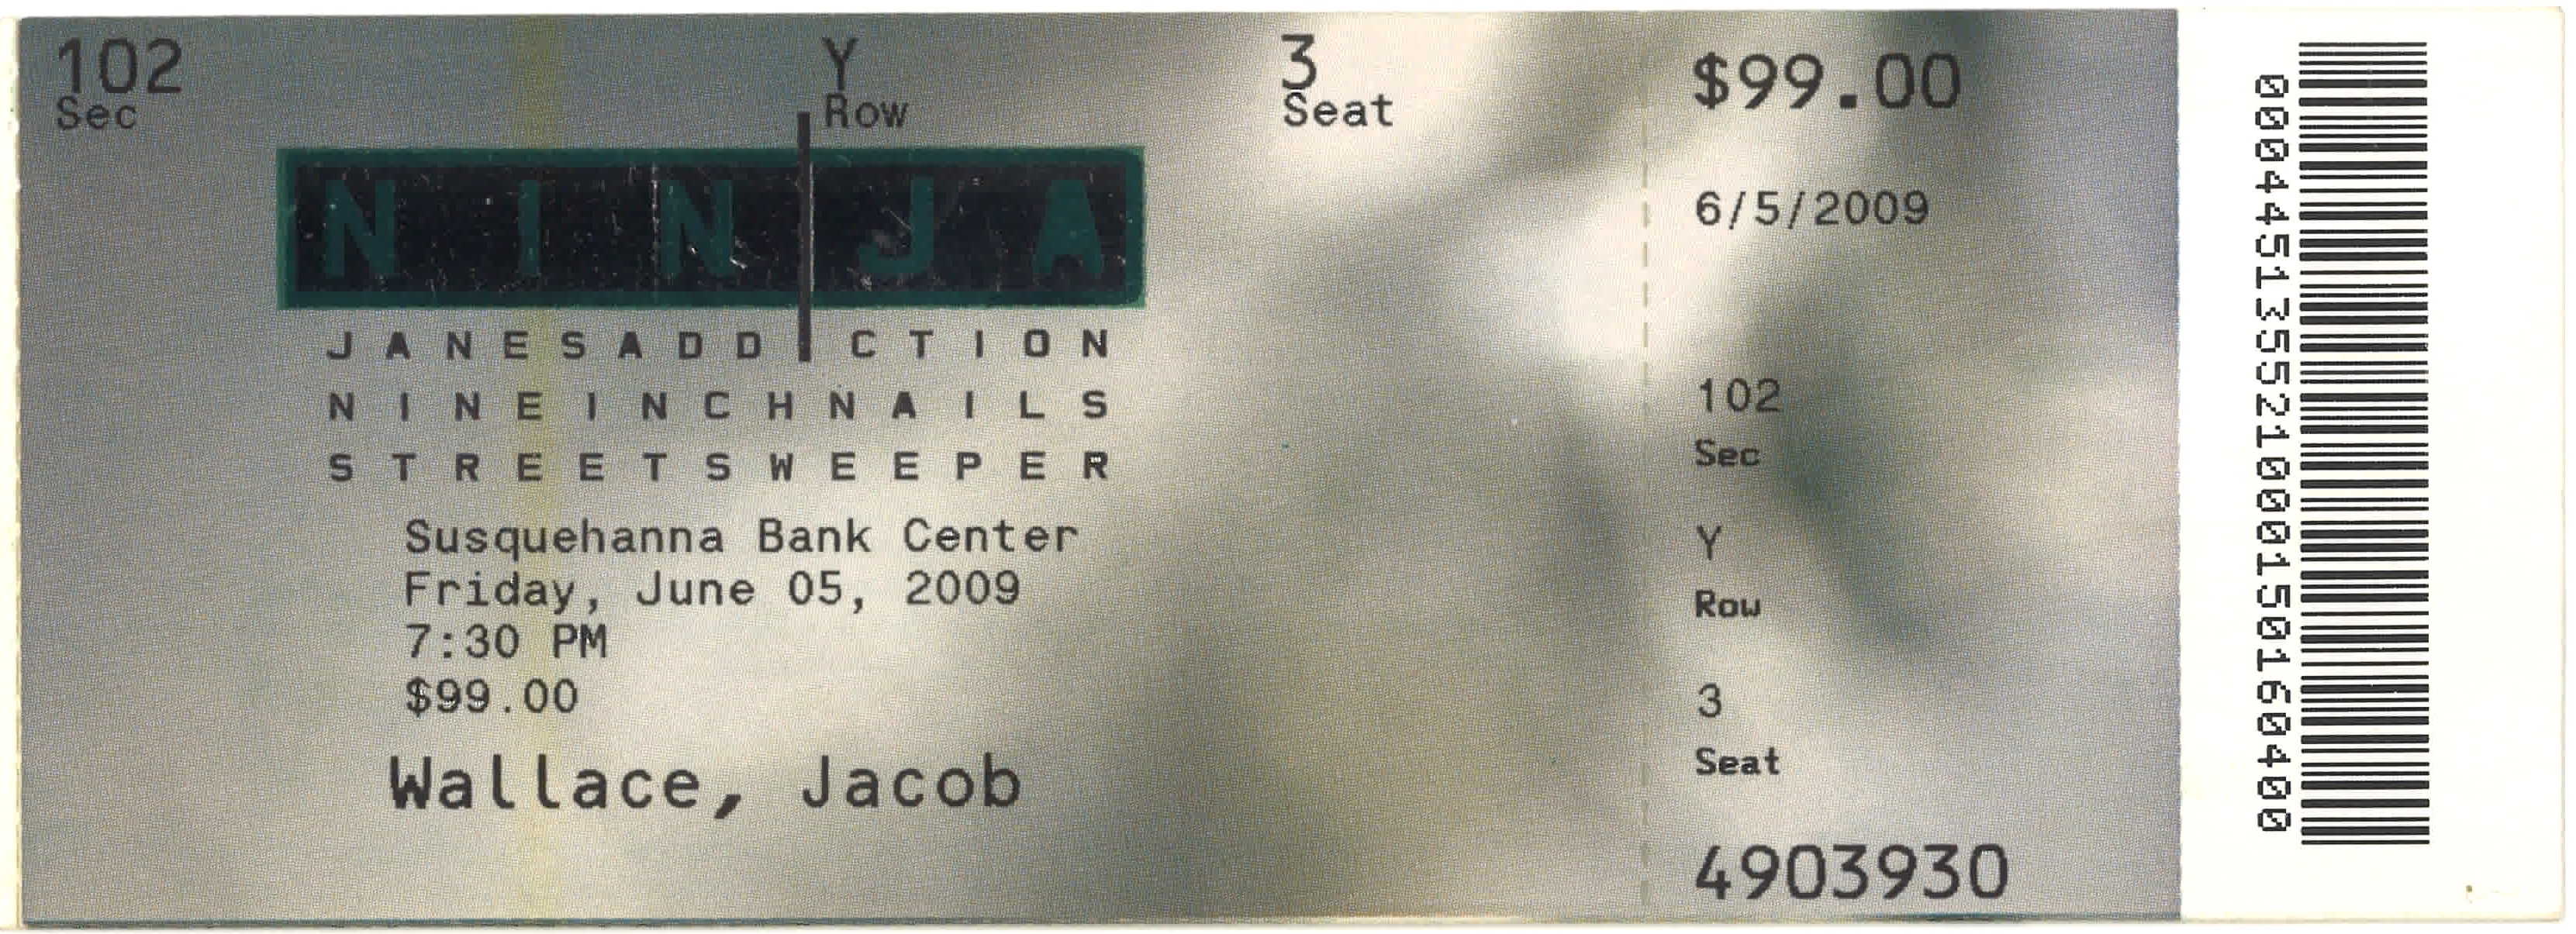 2009/06/05 Ticket